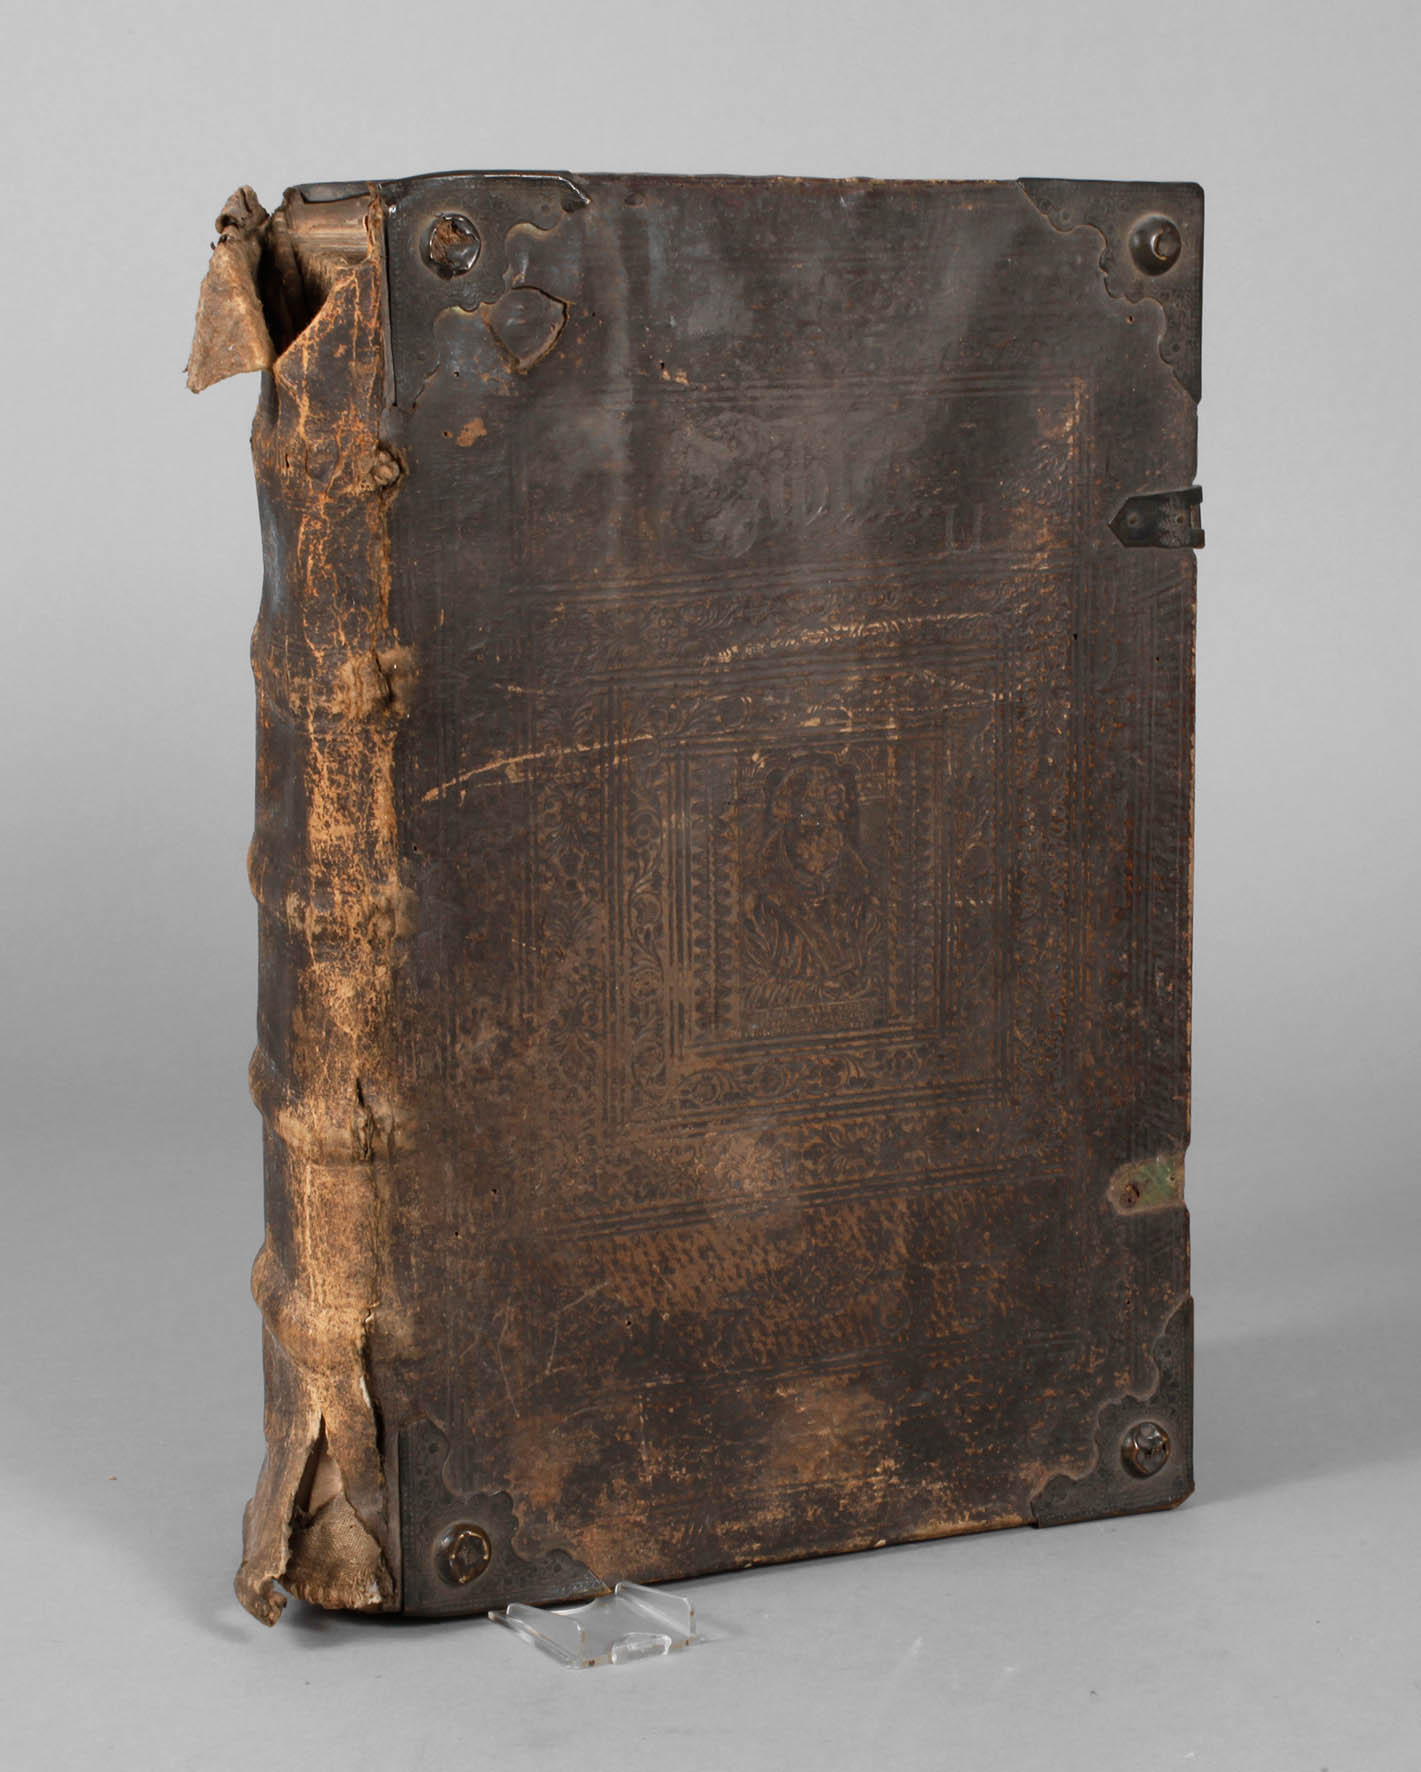 Fragmentarische Dilherr-Bibel um 1702